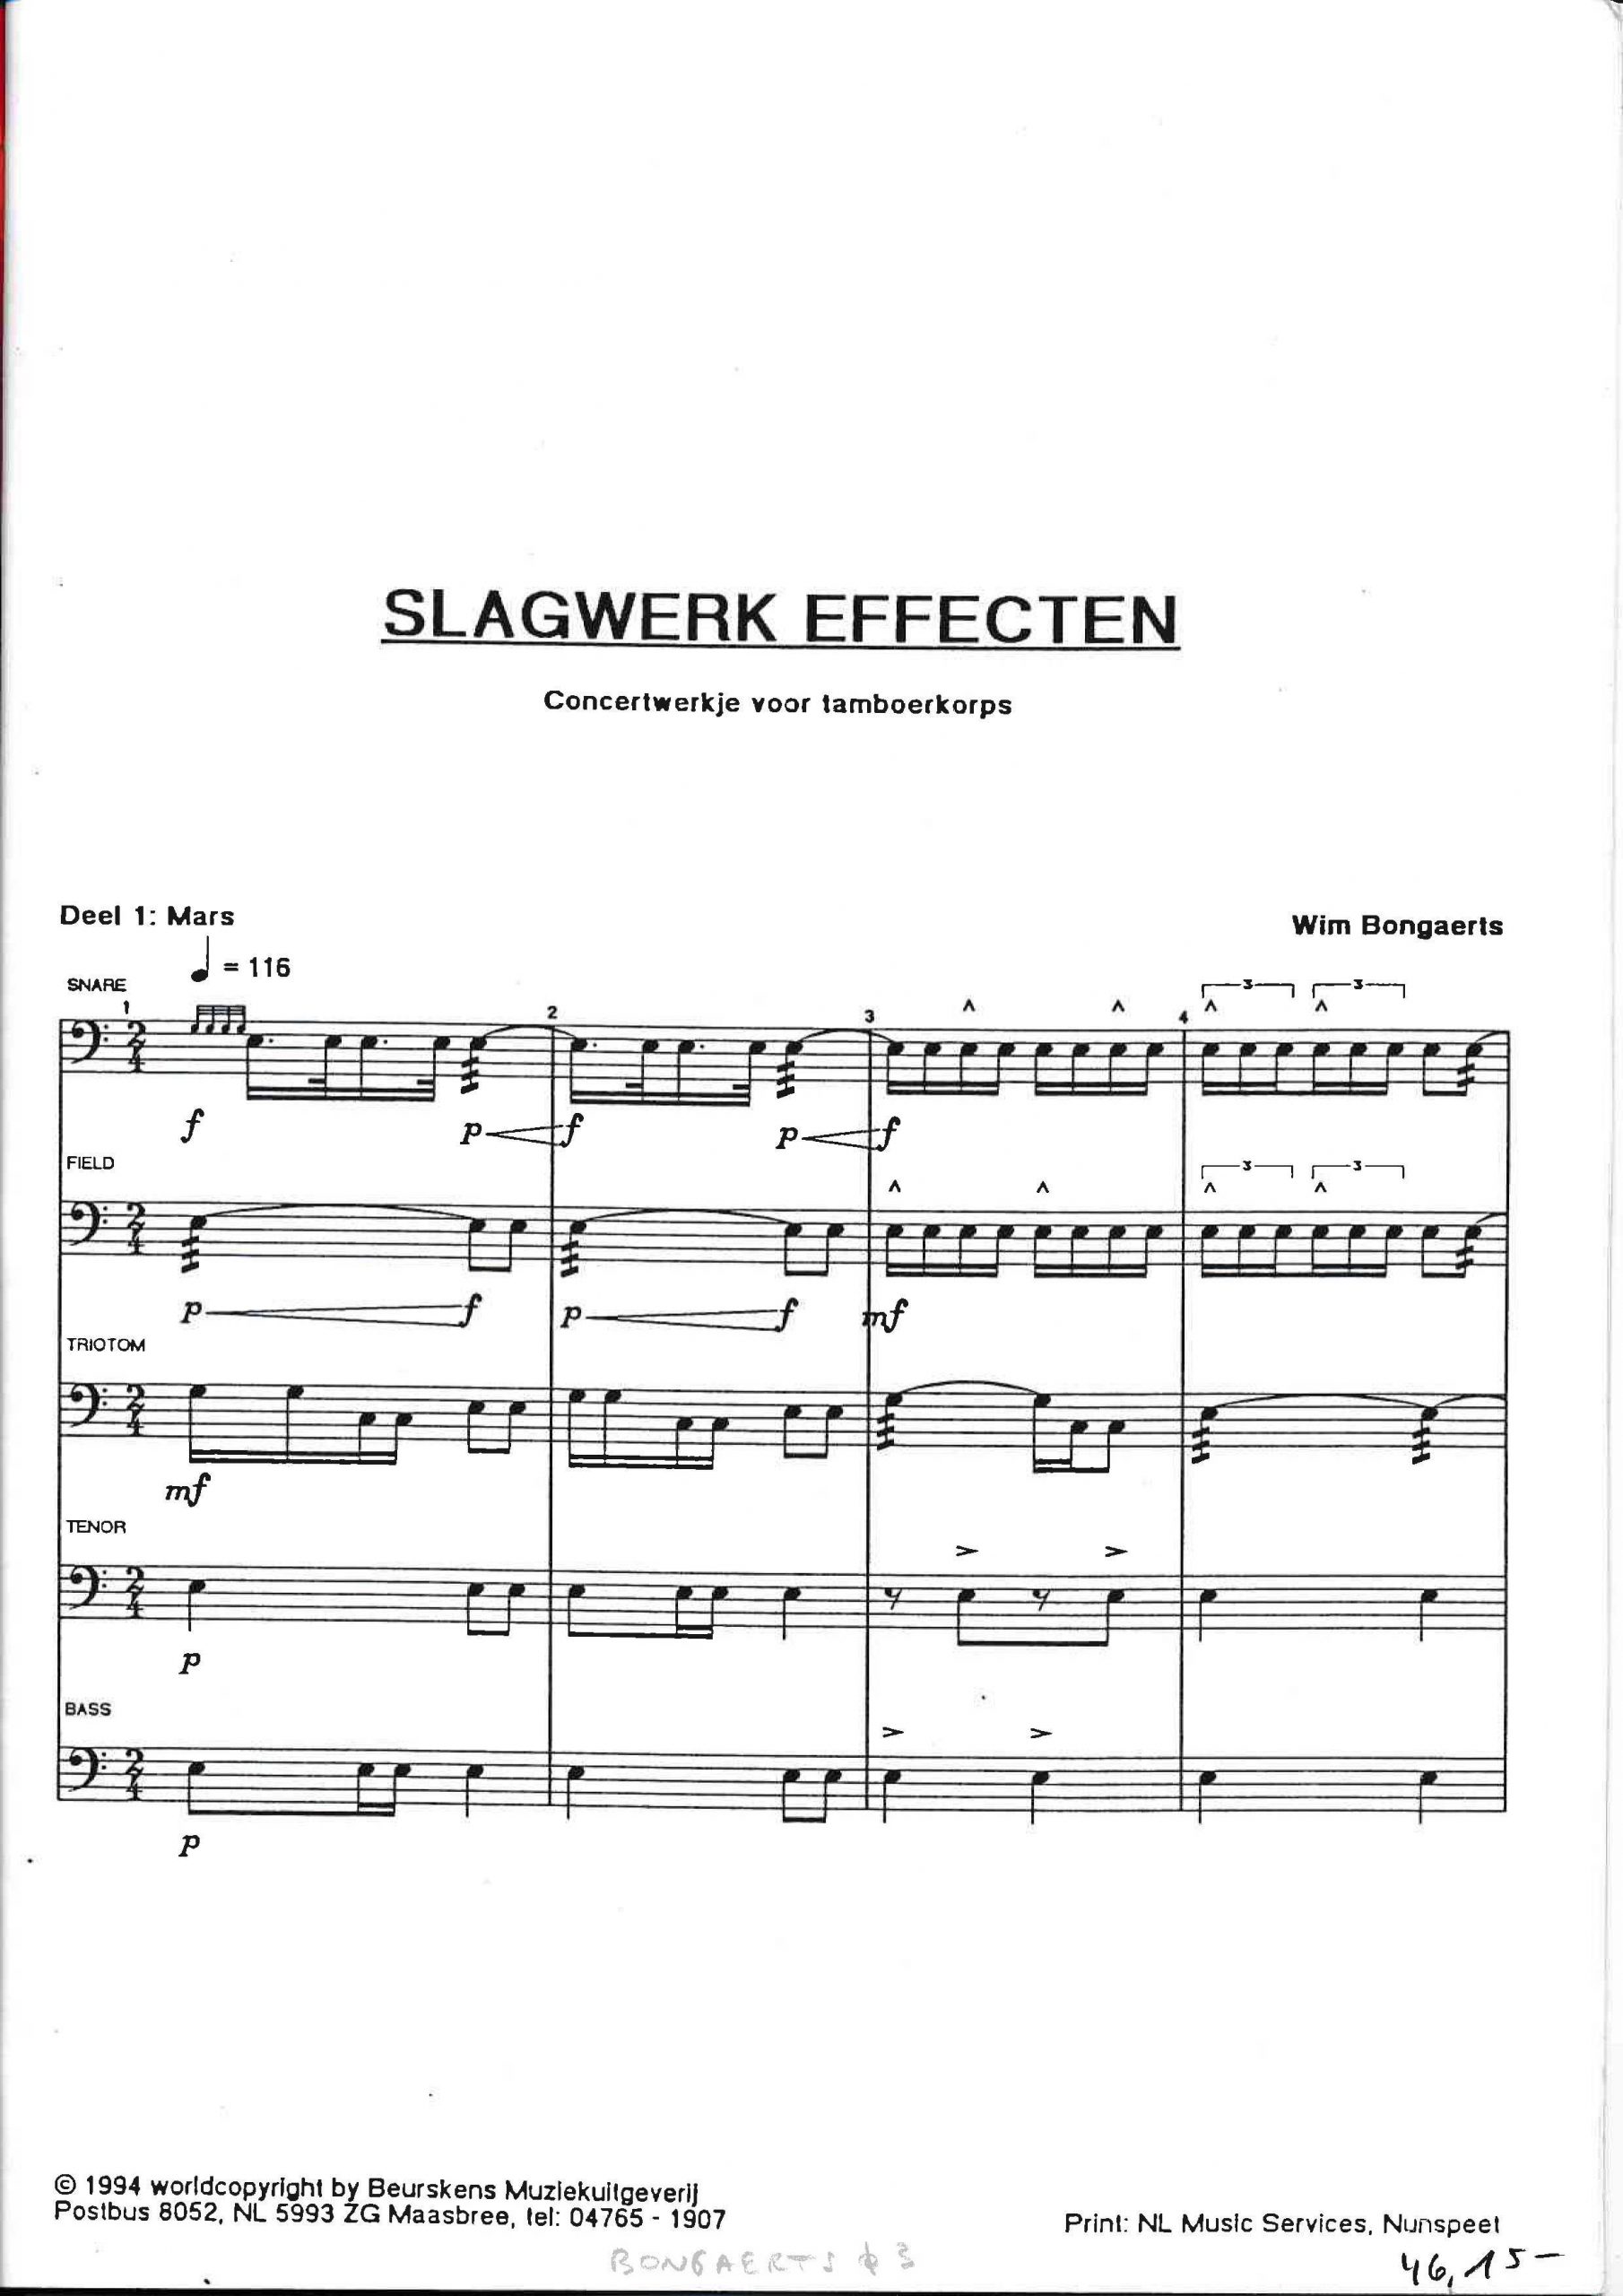 Slagwerk Effecten by Wim Bongaerts